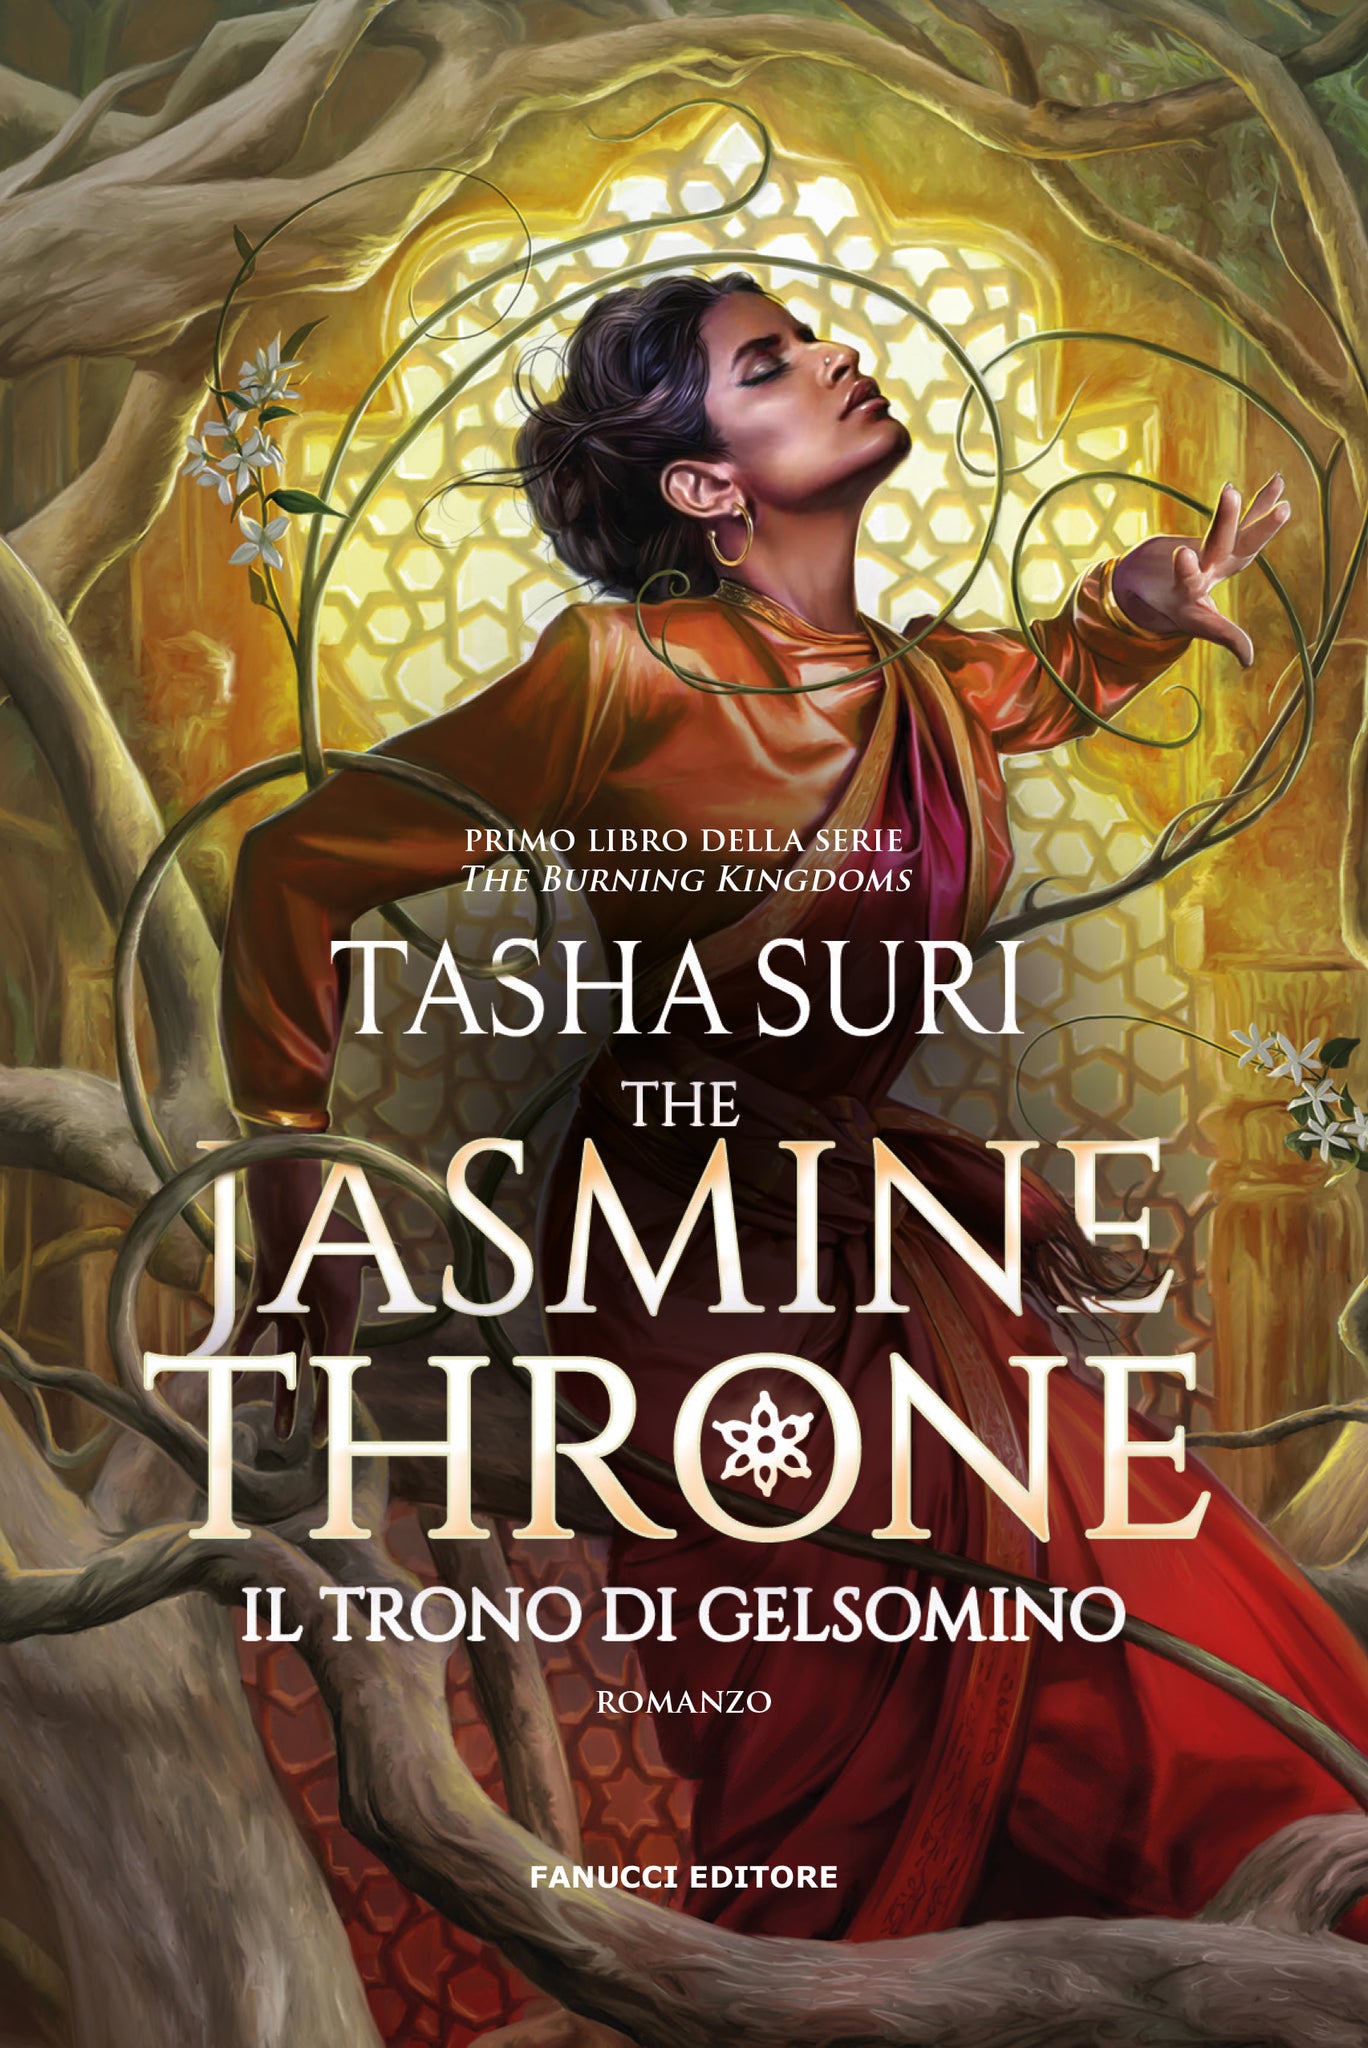 The Jasmine Throne – Il trono di gelsomino